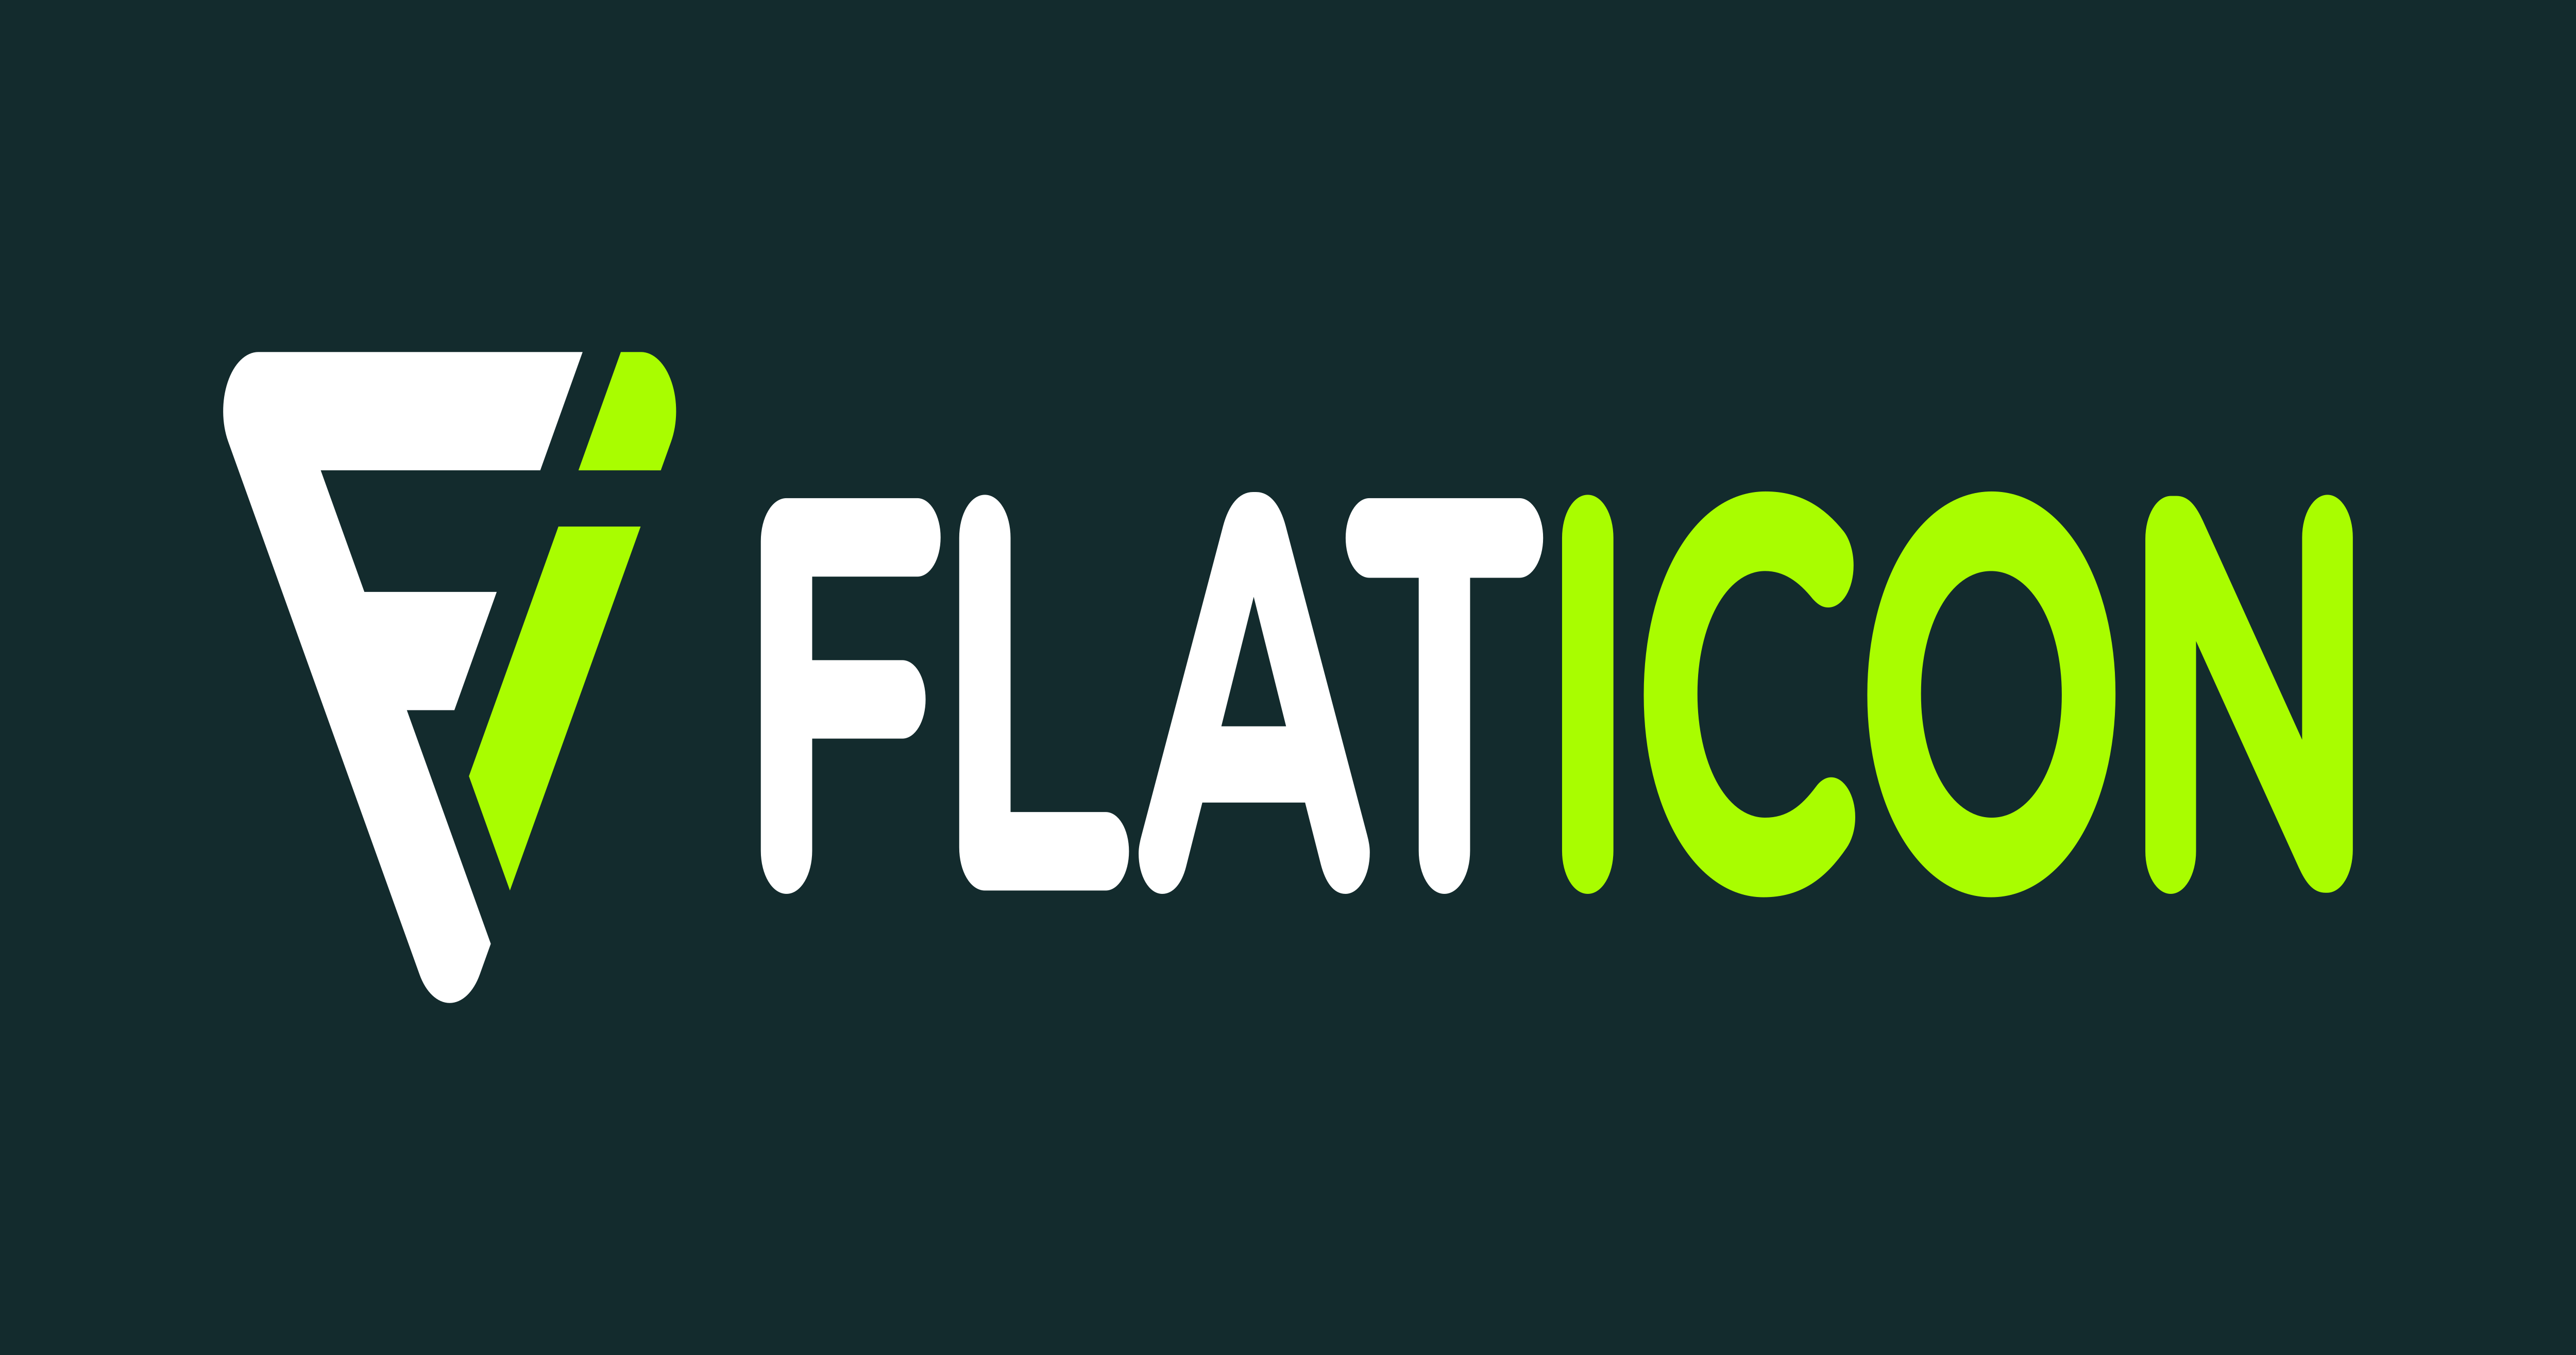  Flaticon  Logos Download